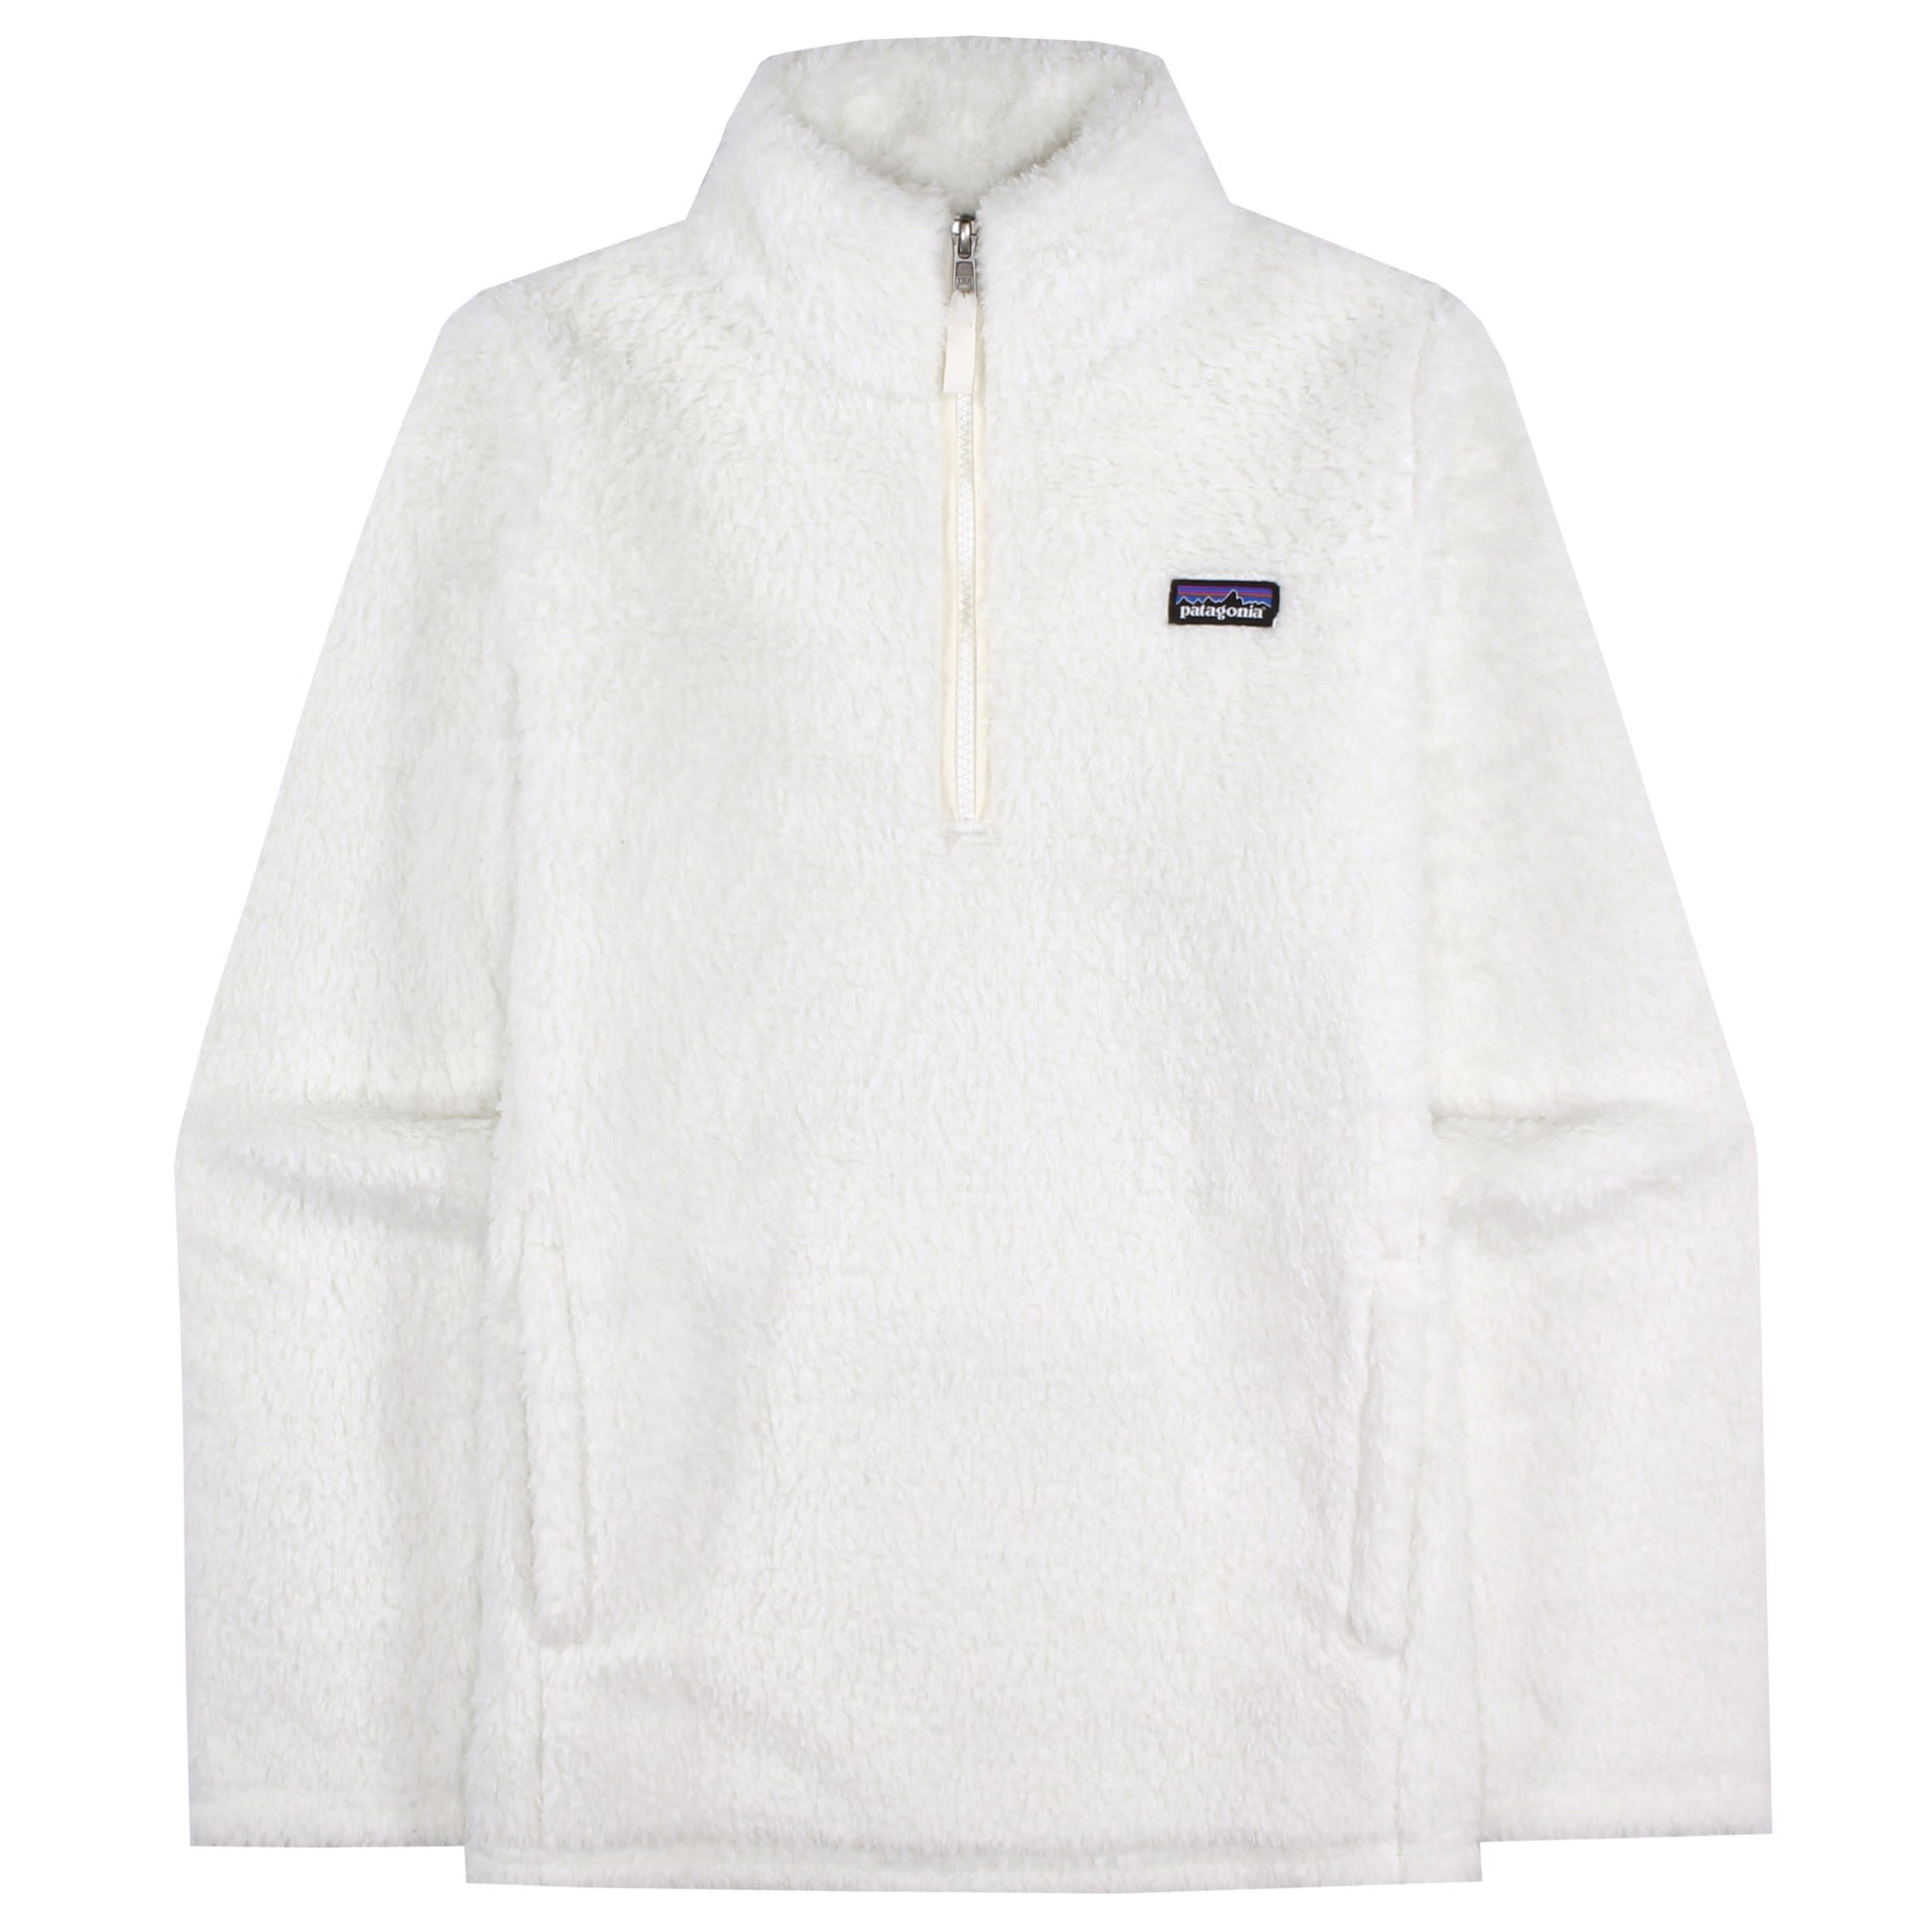 Patagonia Los Gatos Fleece Jacket Girls XL 14 White 1/4 Zip Pullover Style  65495